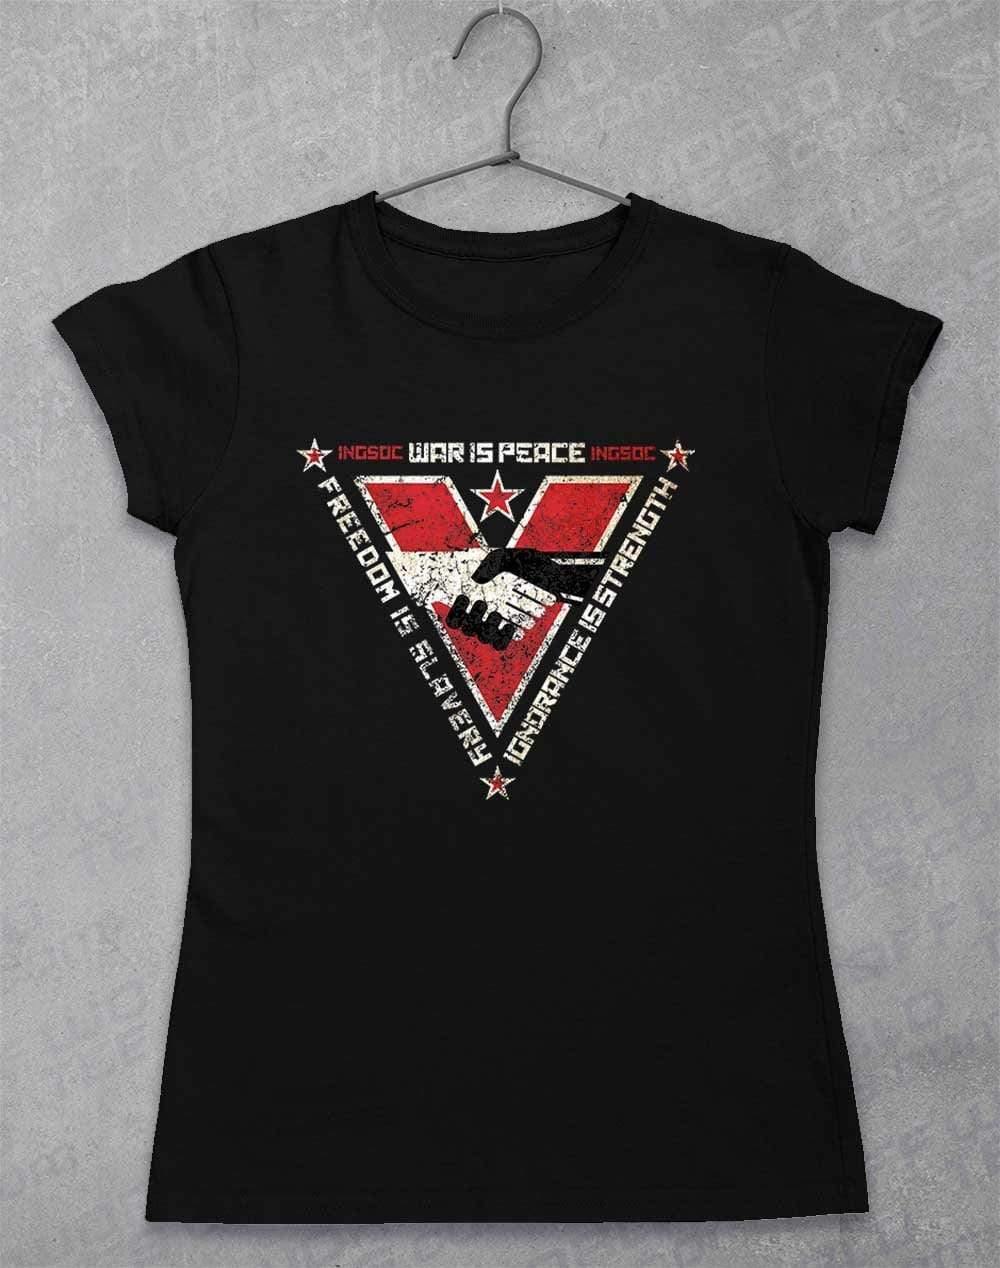 INGSOC Triangular Slogans Women's T-Shirt 8-10 / Black  - Off World Tees